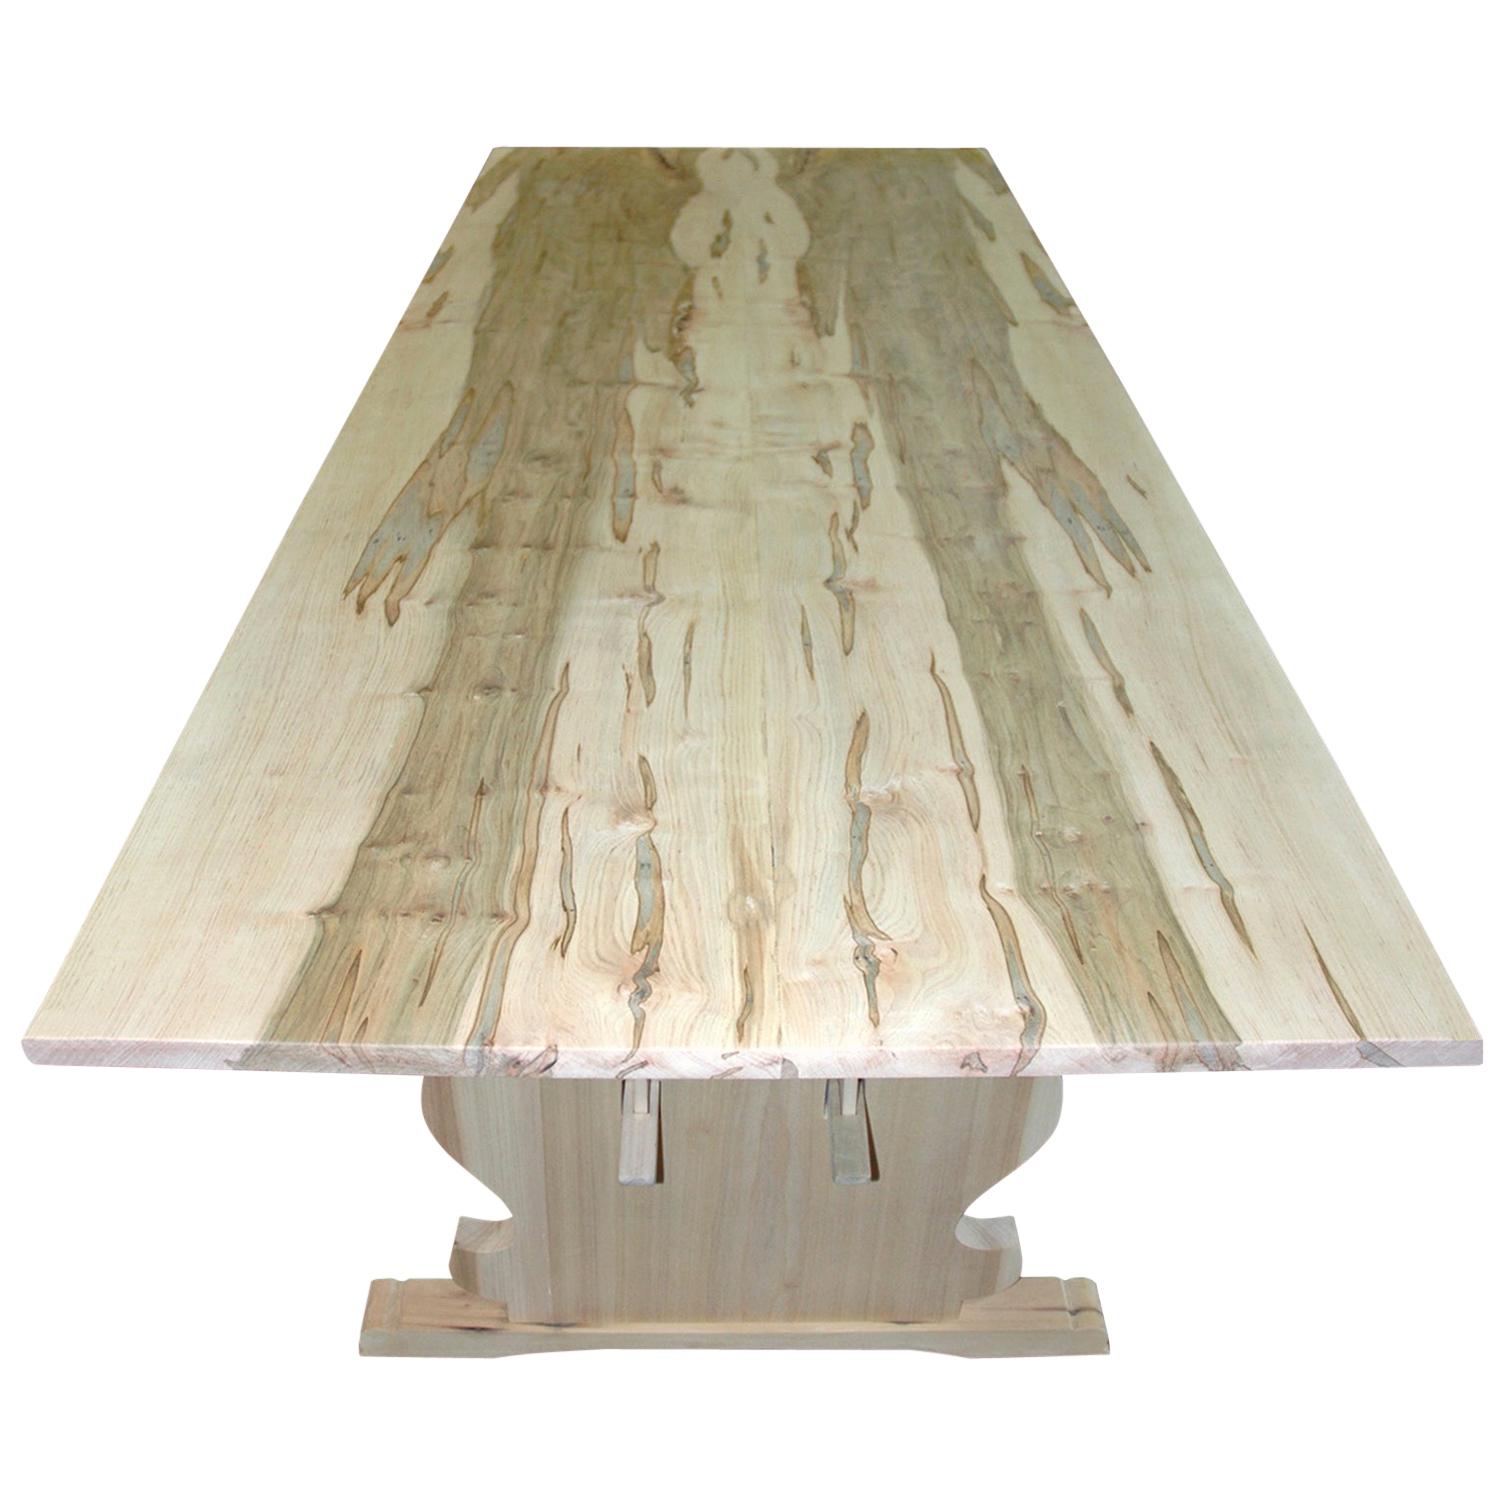 Bonnin Ashley Custom Made Wood Scandinavian Dining Table with Natural Finish